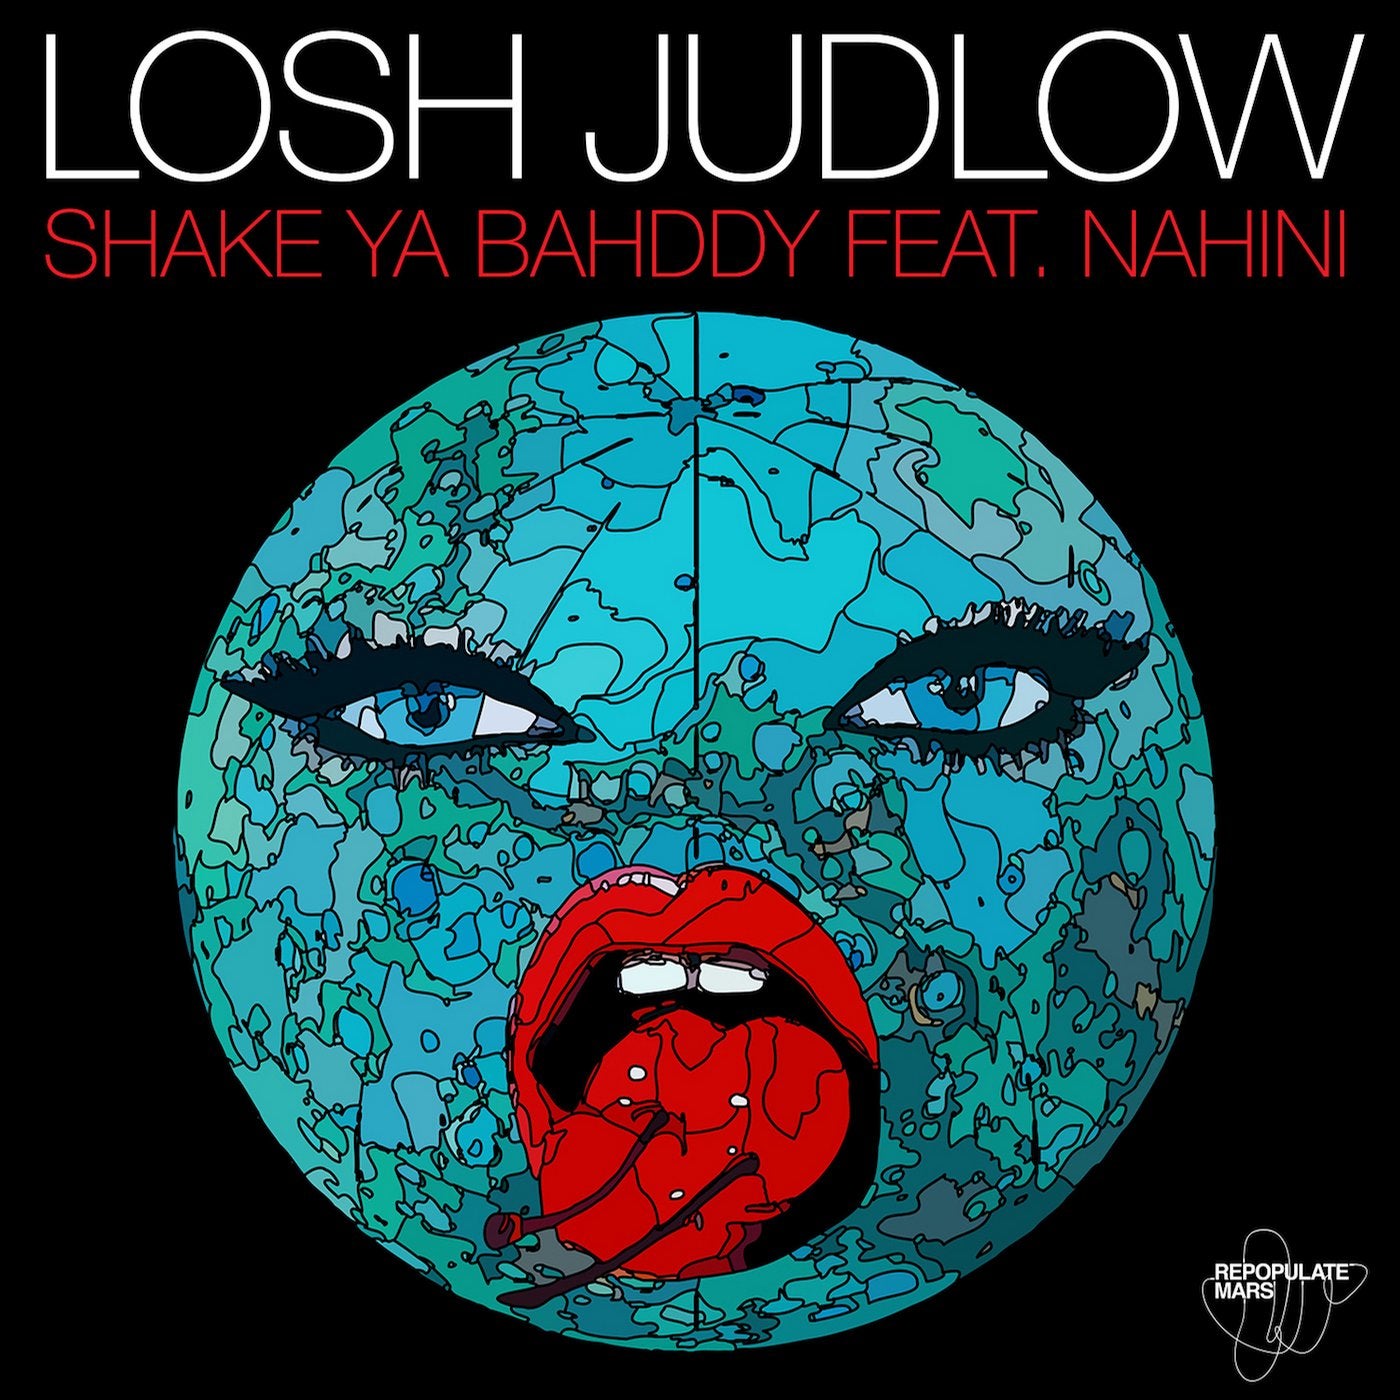 Shake Ya Bahddy feat.Nahini